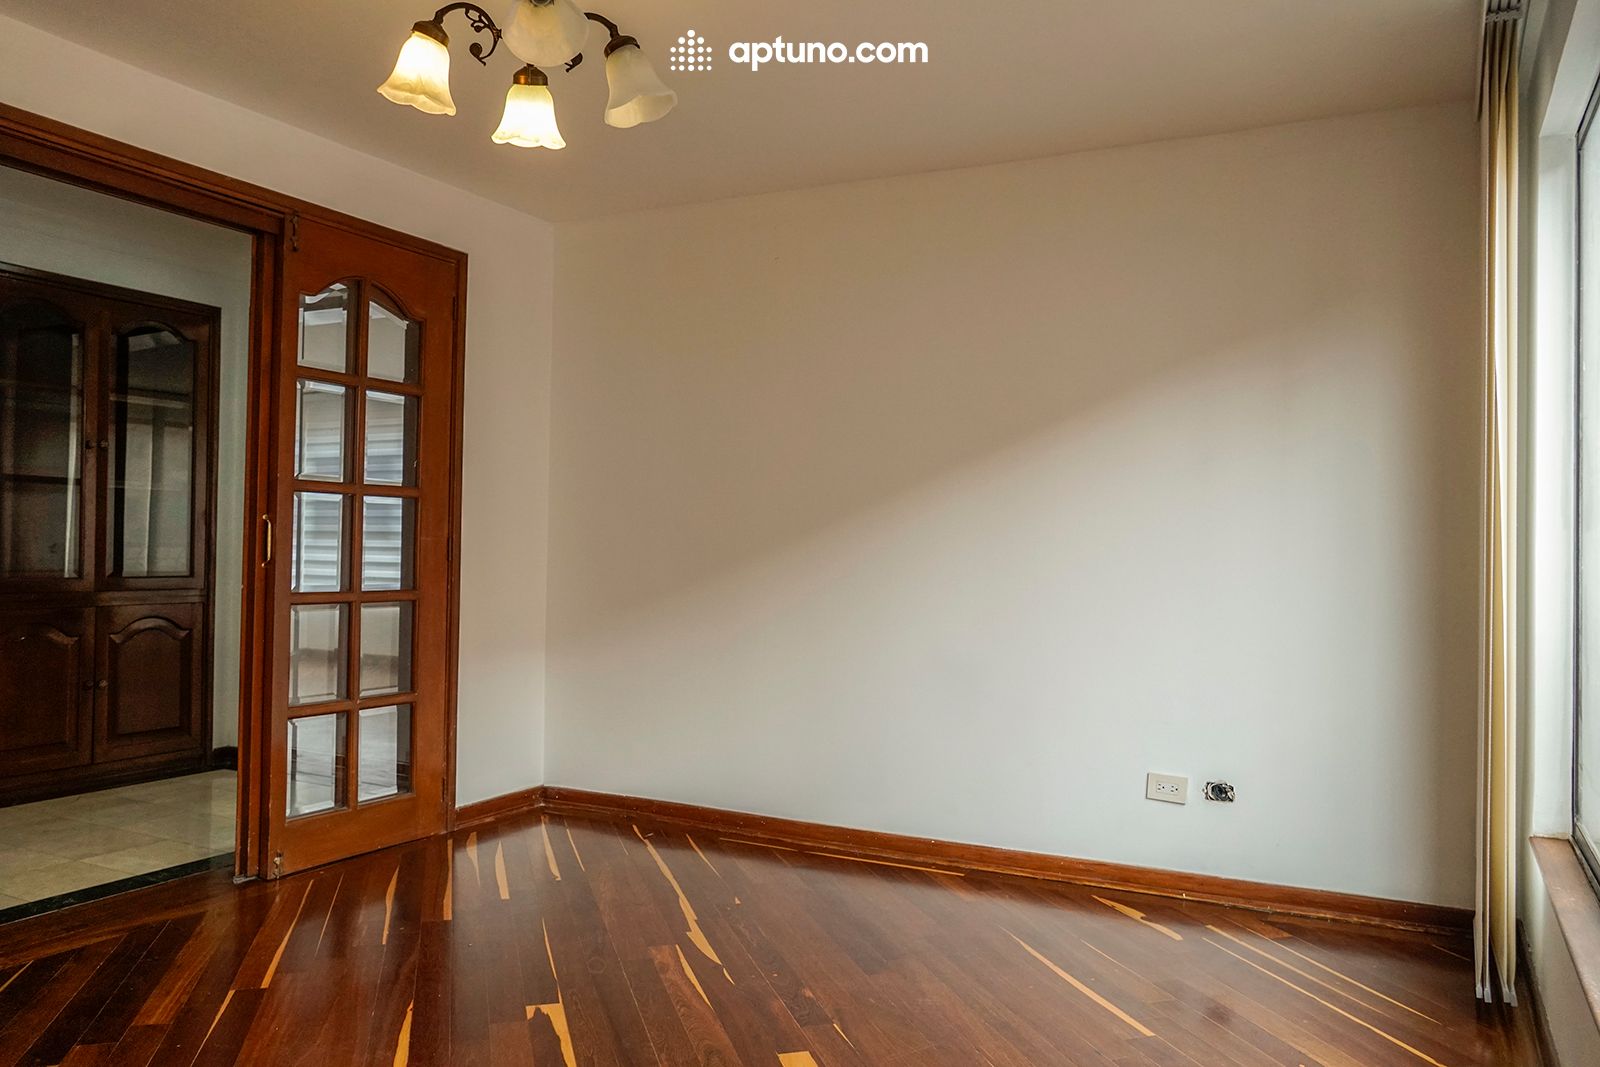 Apartamento en arriendo Santa Bibiana 207 m² - $ 5.500.000,00